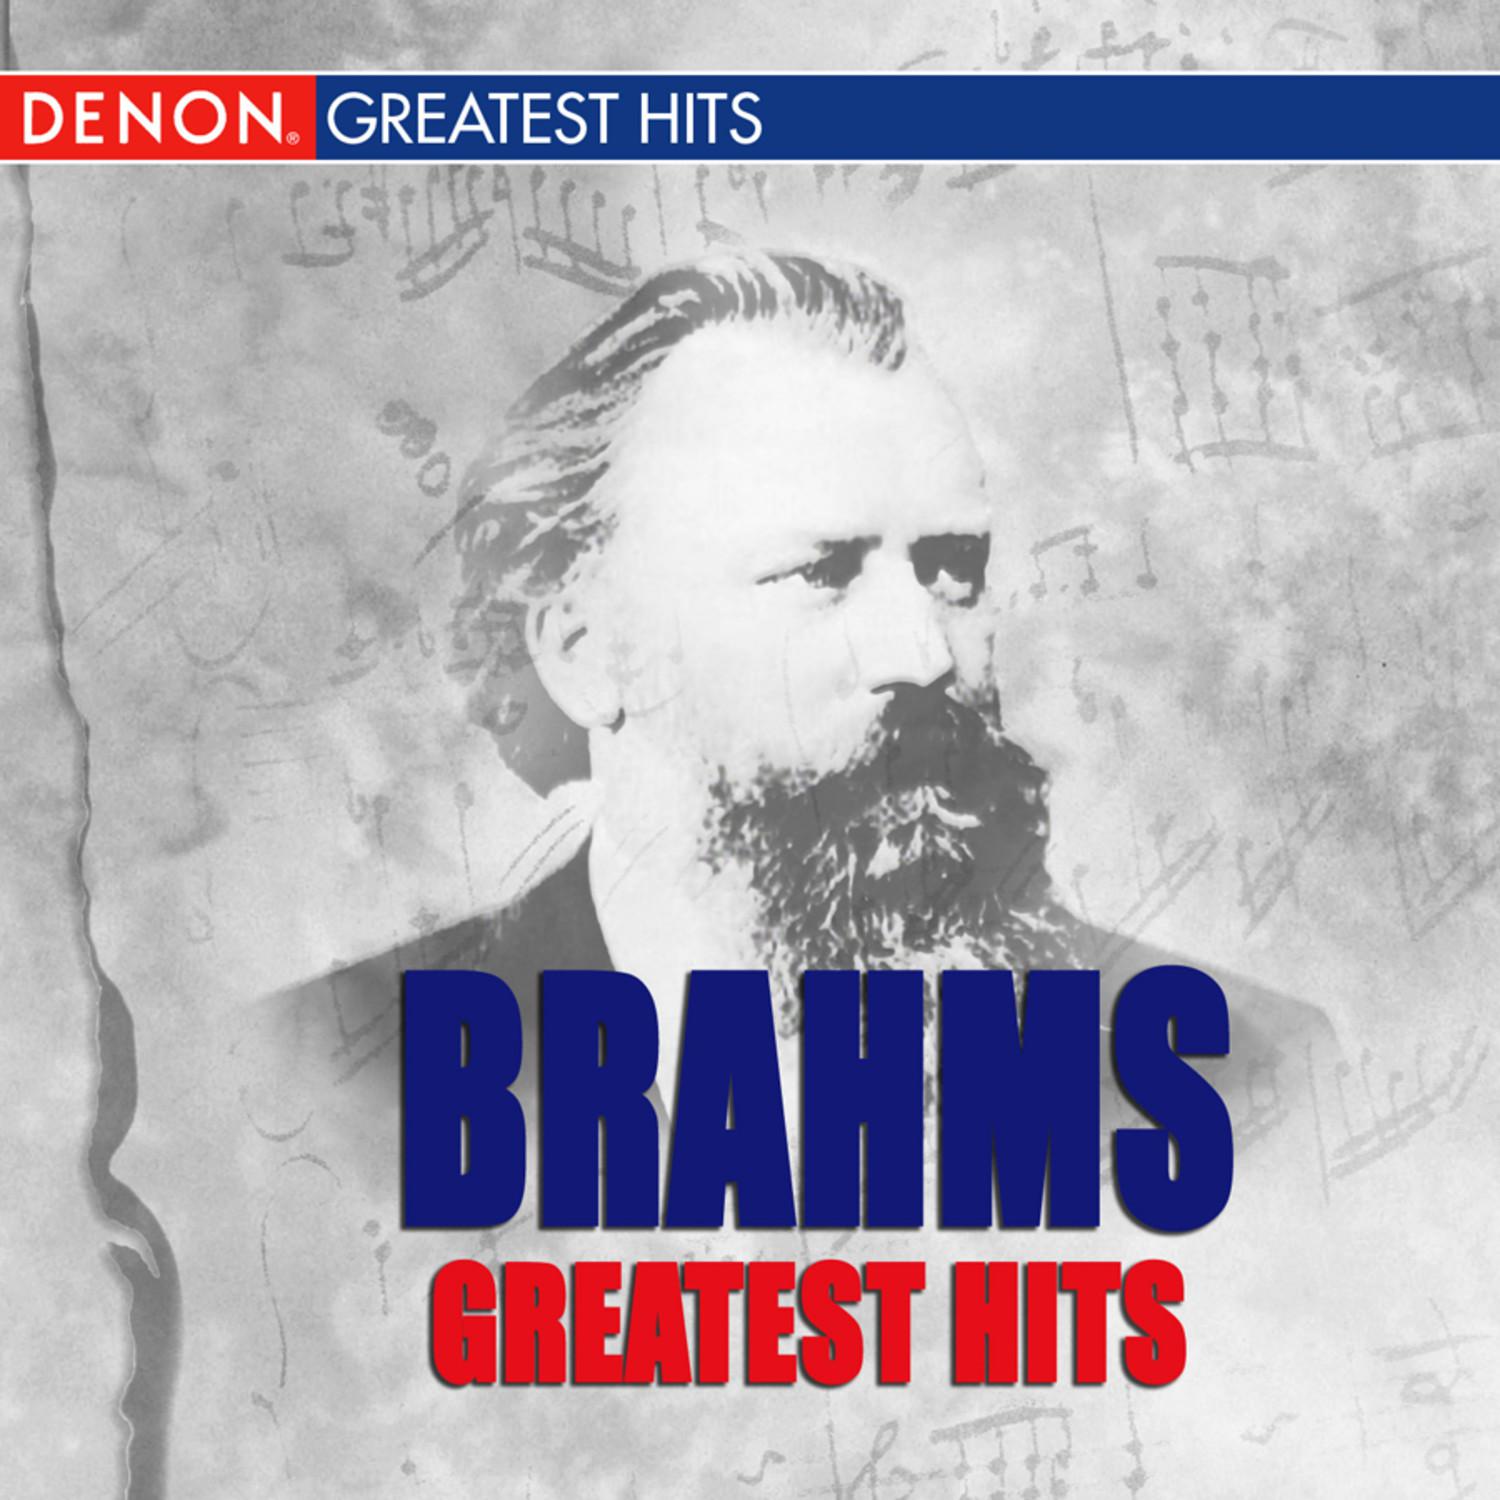 Brahms' Greatest Hits